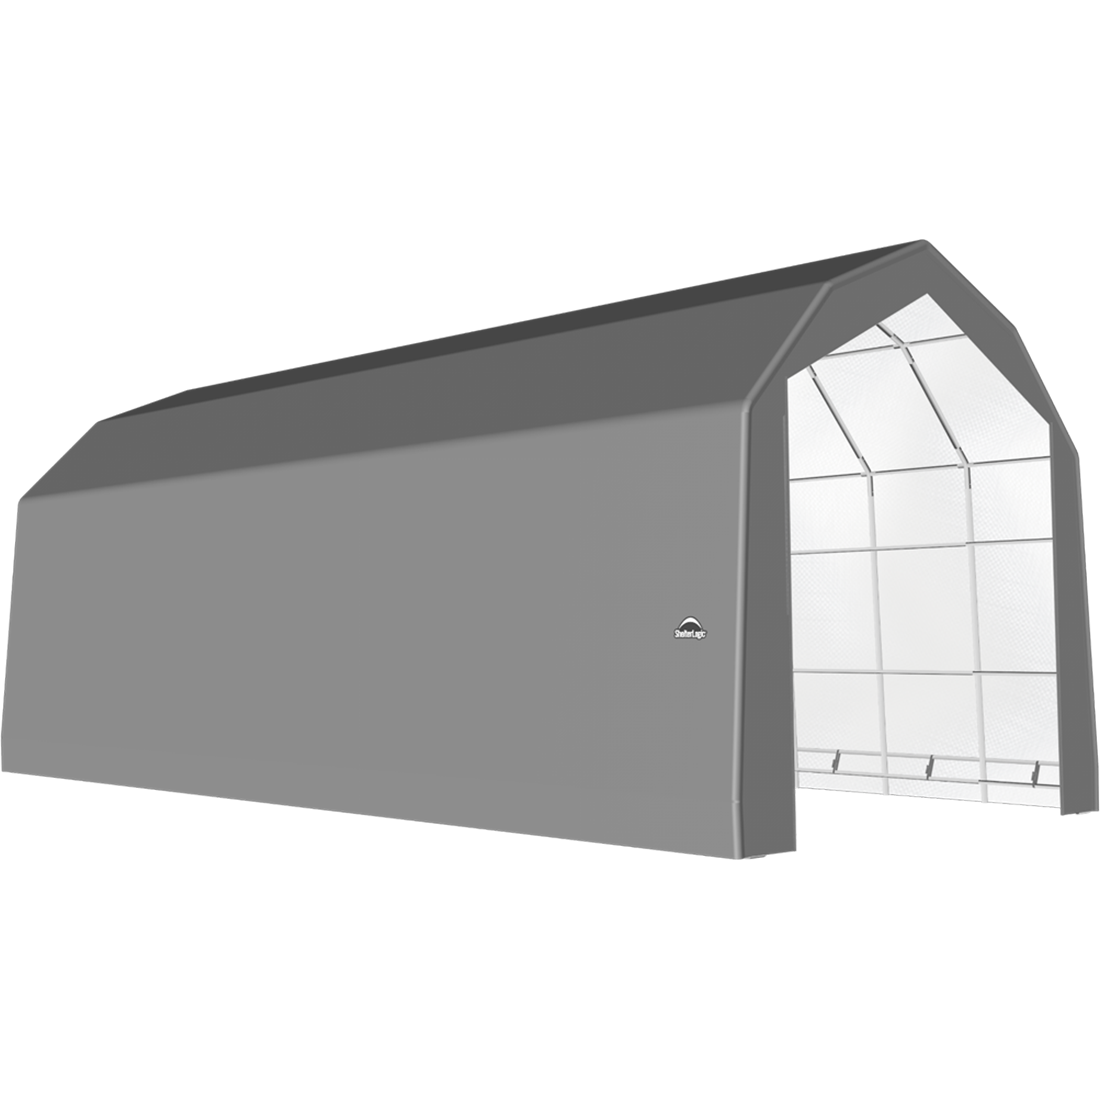 ShelterTech SP Series Barn Shelter, 20 ft. x 44 ft. x 18 ft. Heavy Duty PVC 14.5 oz. Gray